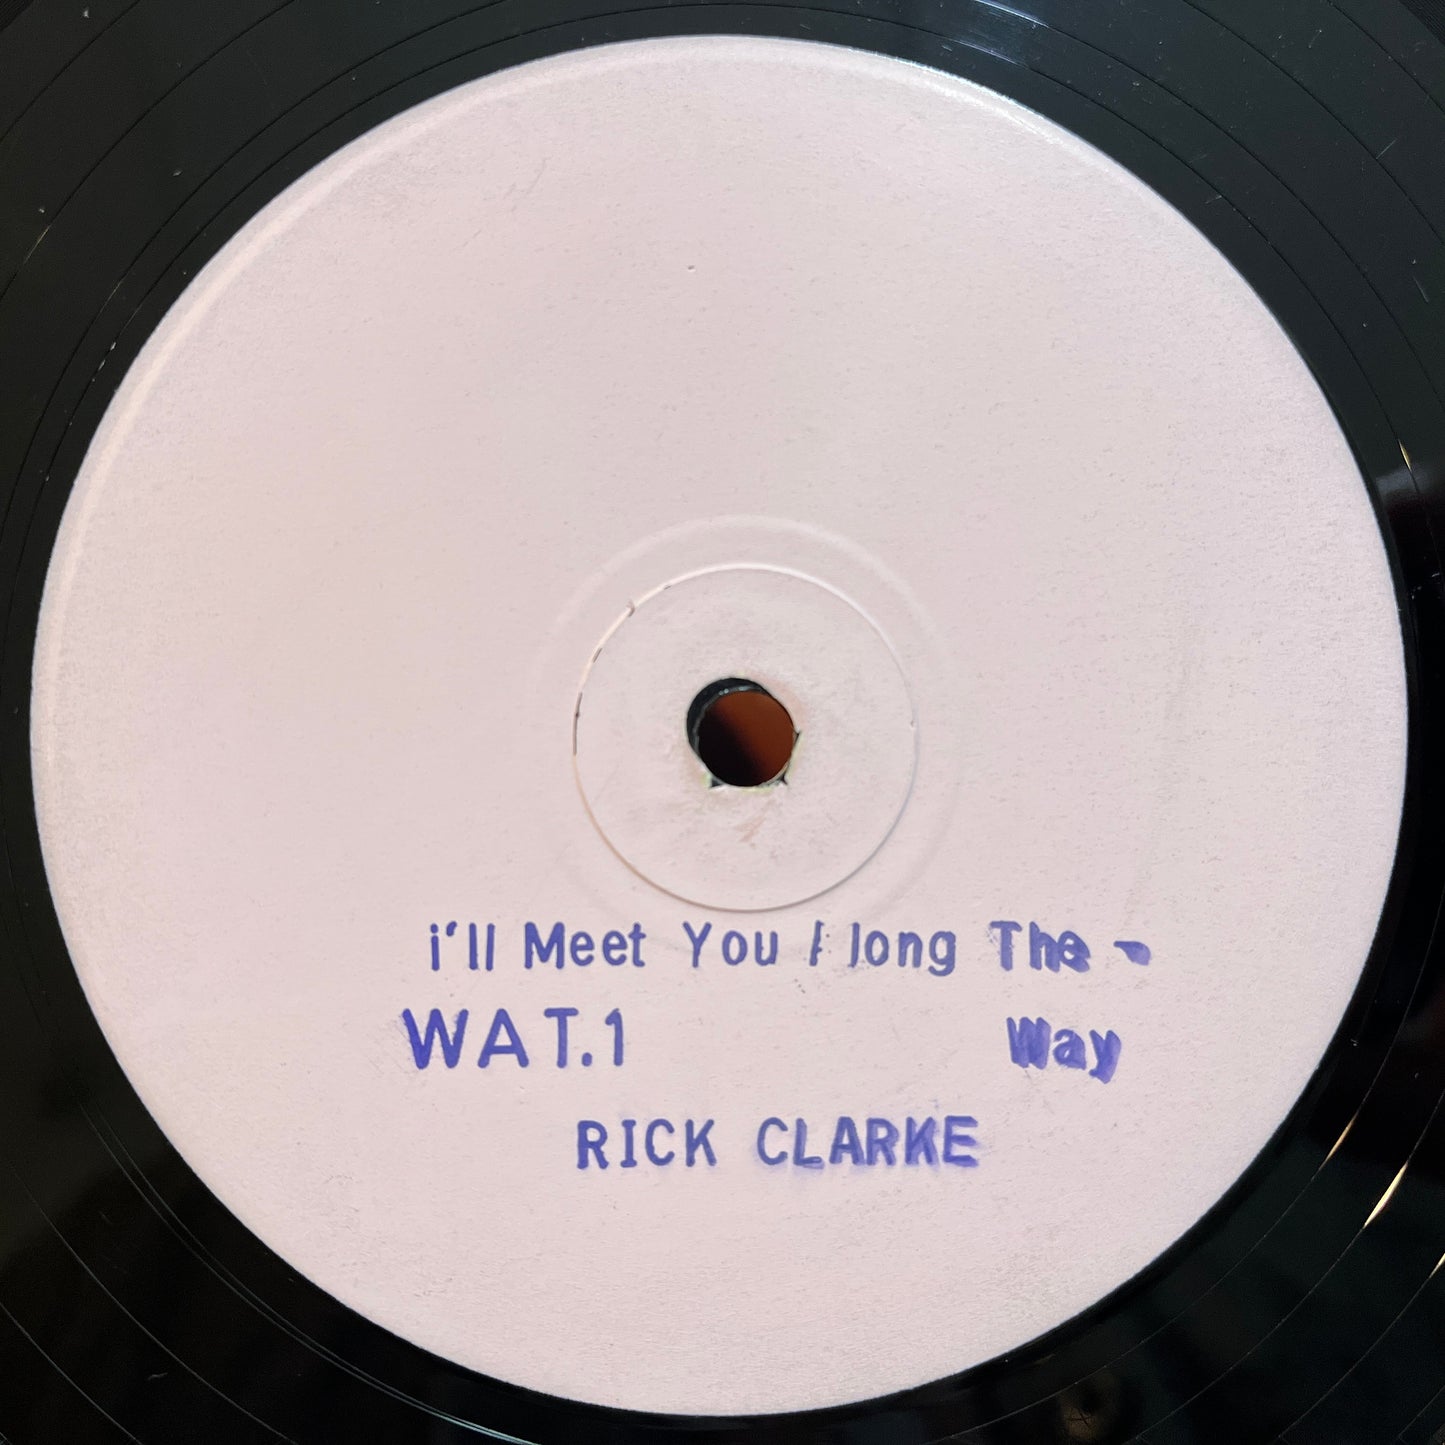 Rick Clarke – I'll Meet You Along The Way